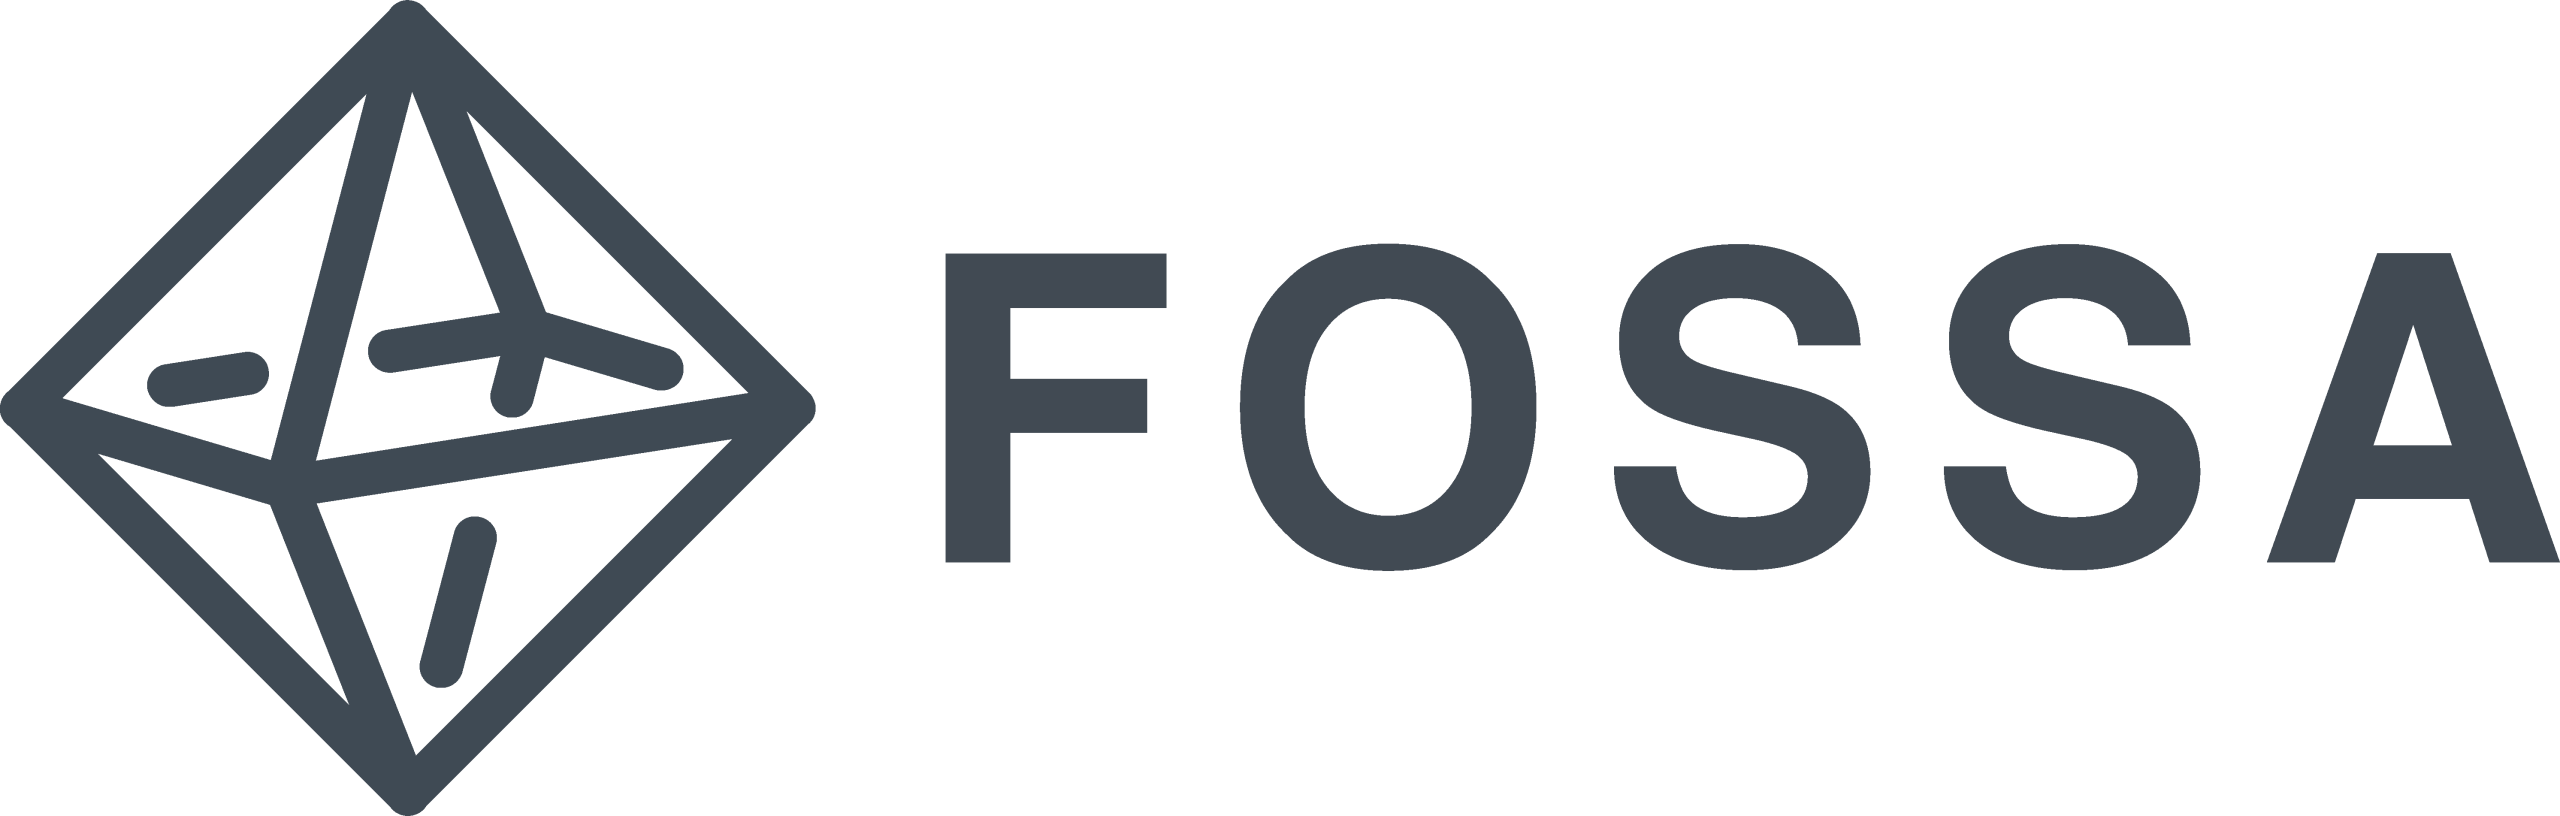 Fossa Systems